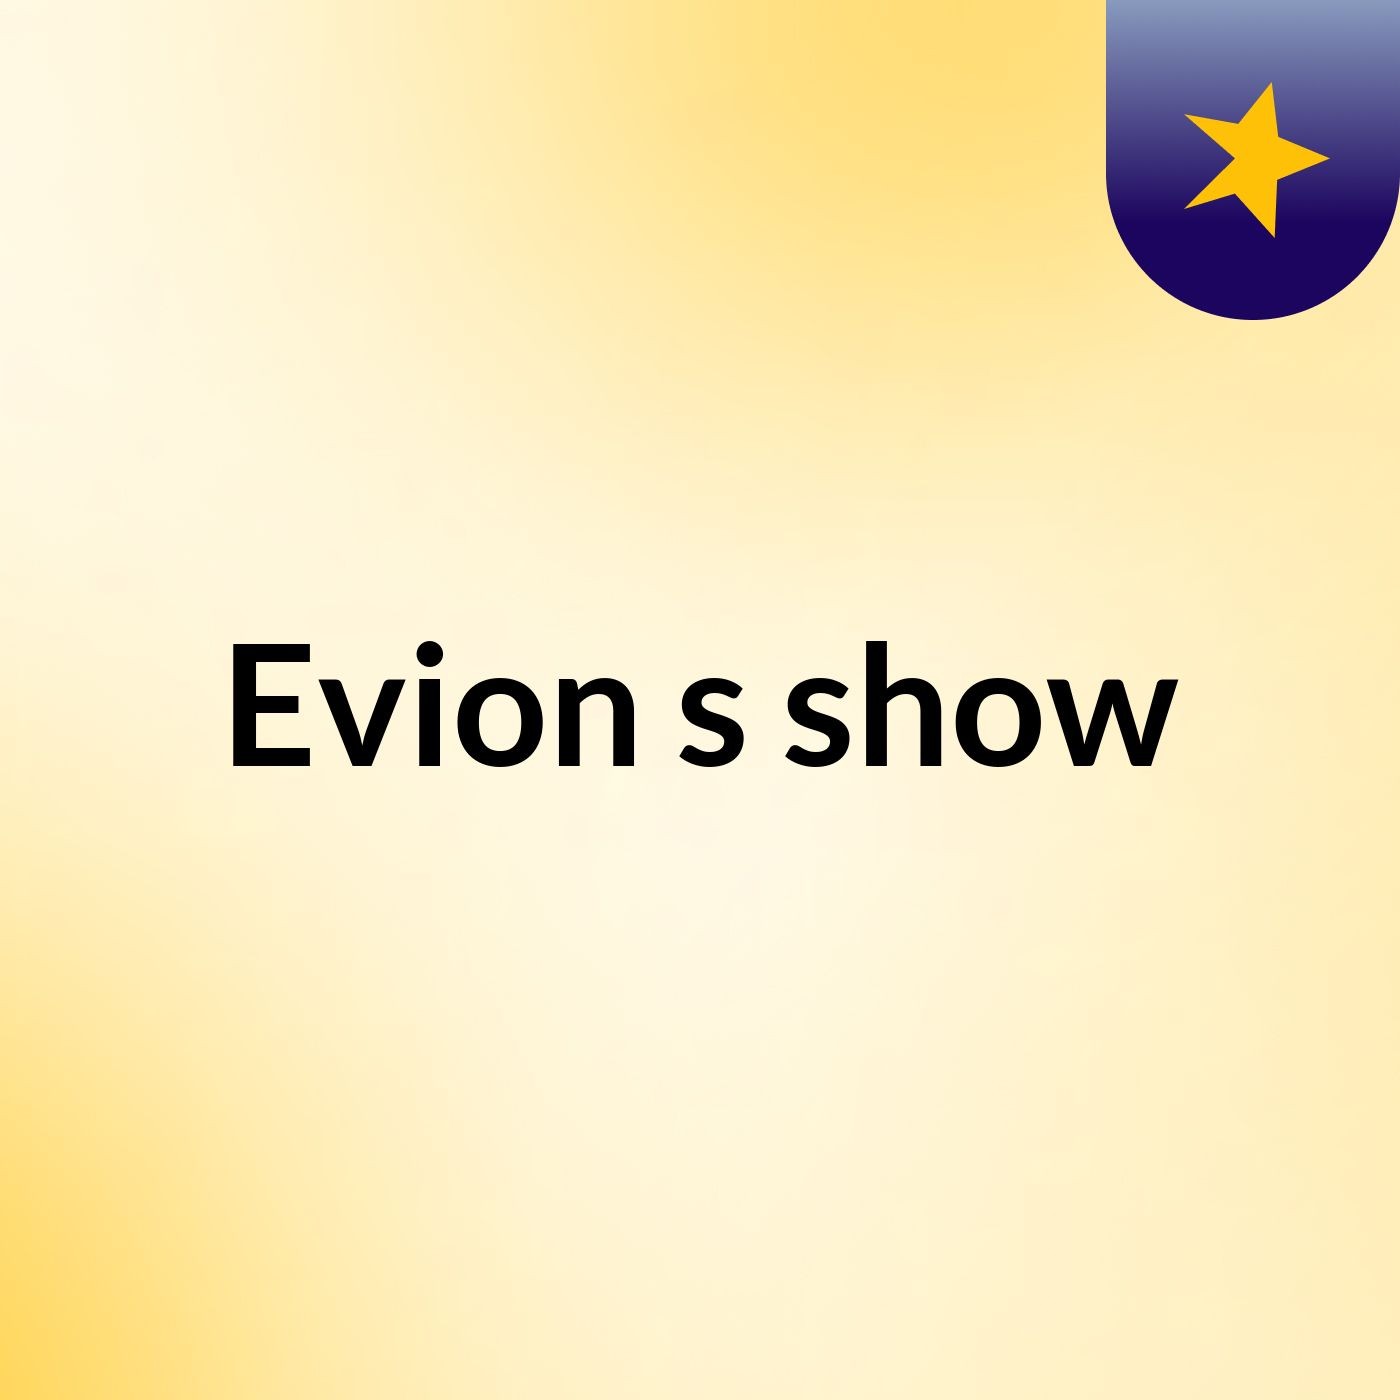 Evion's show